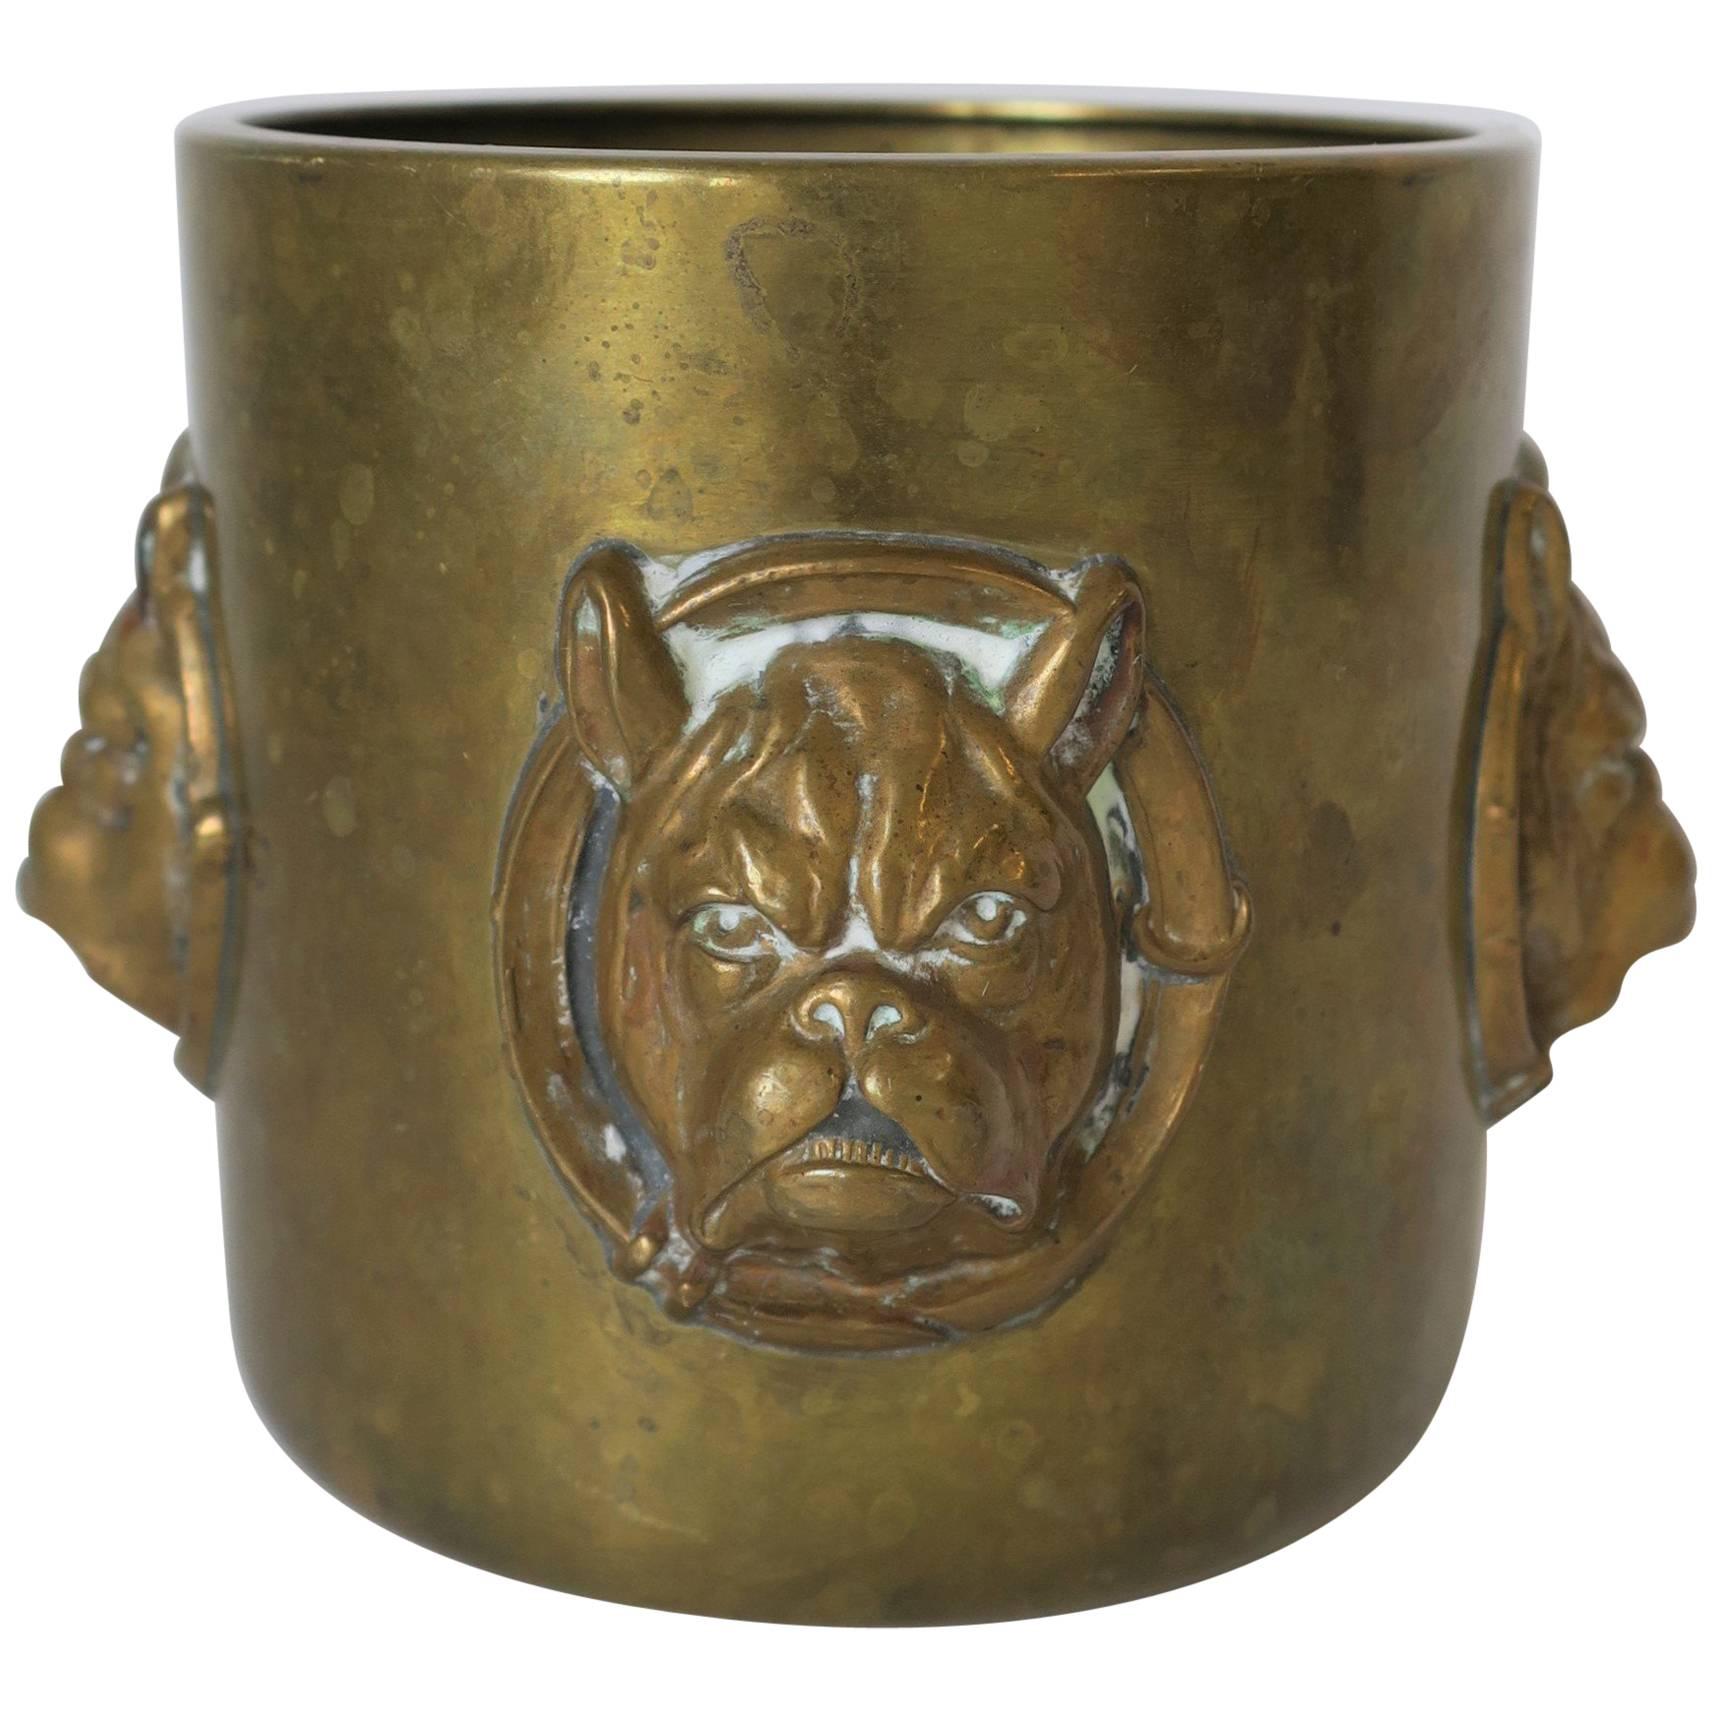 Brass Cup with Bulldog Face Sculpture